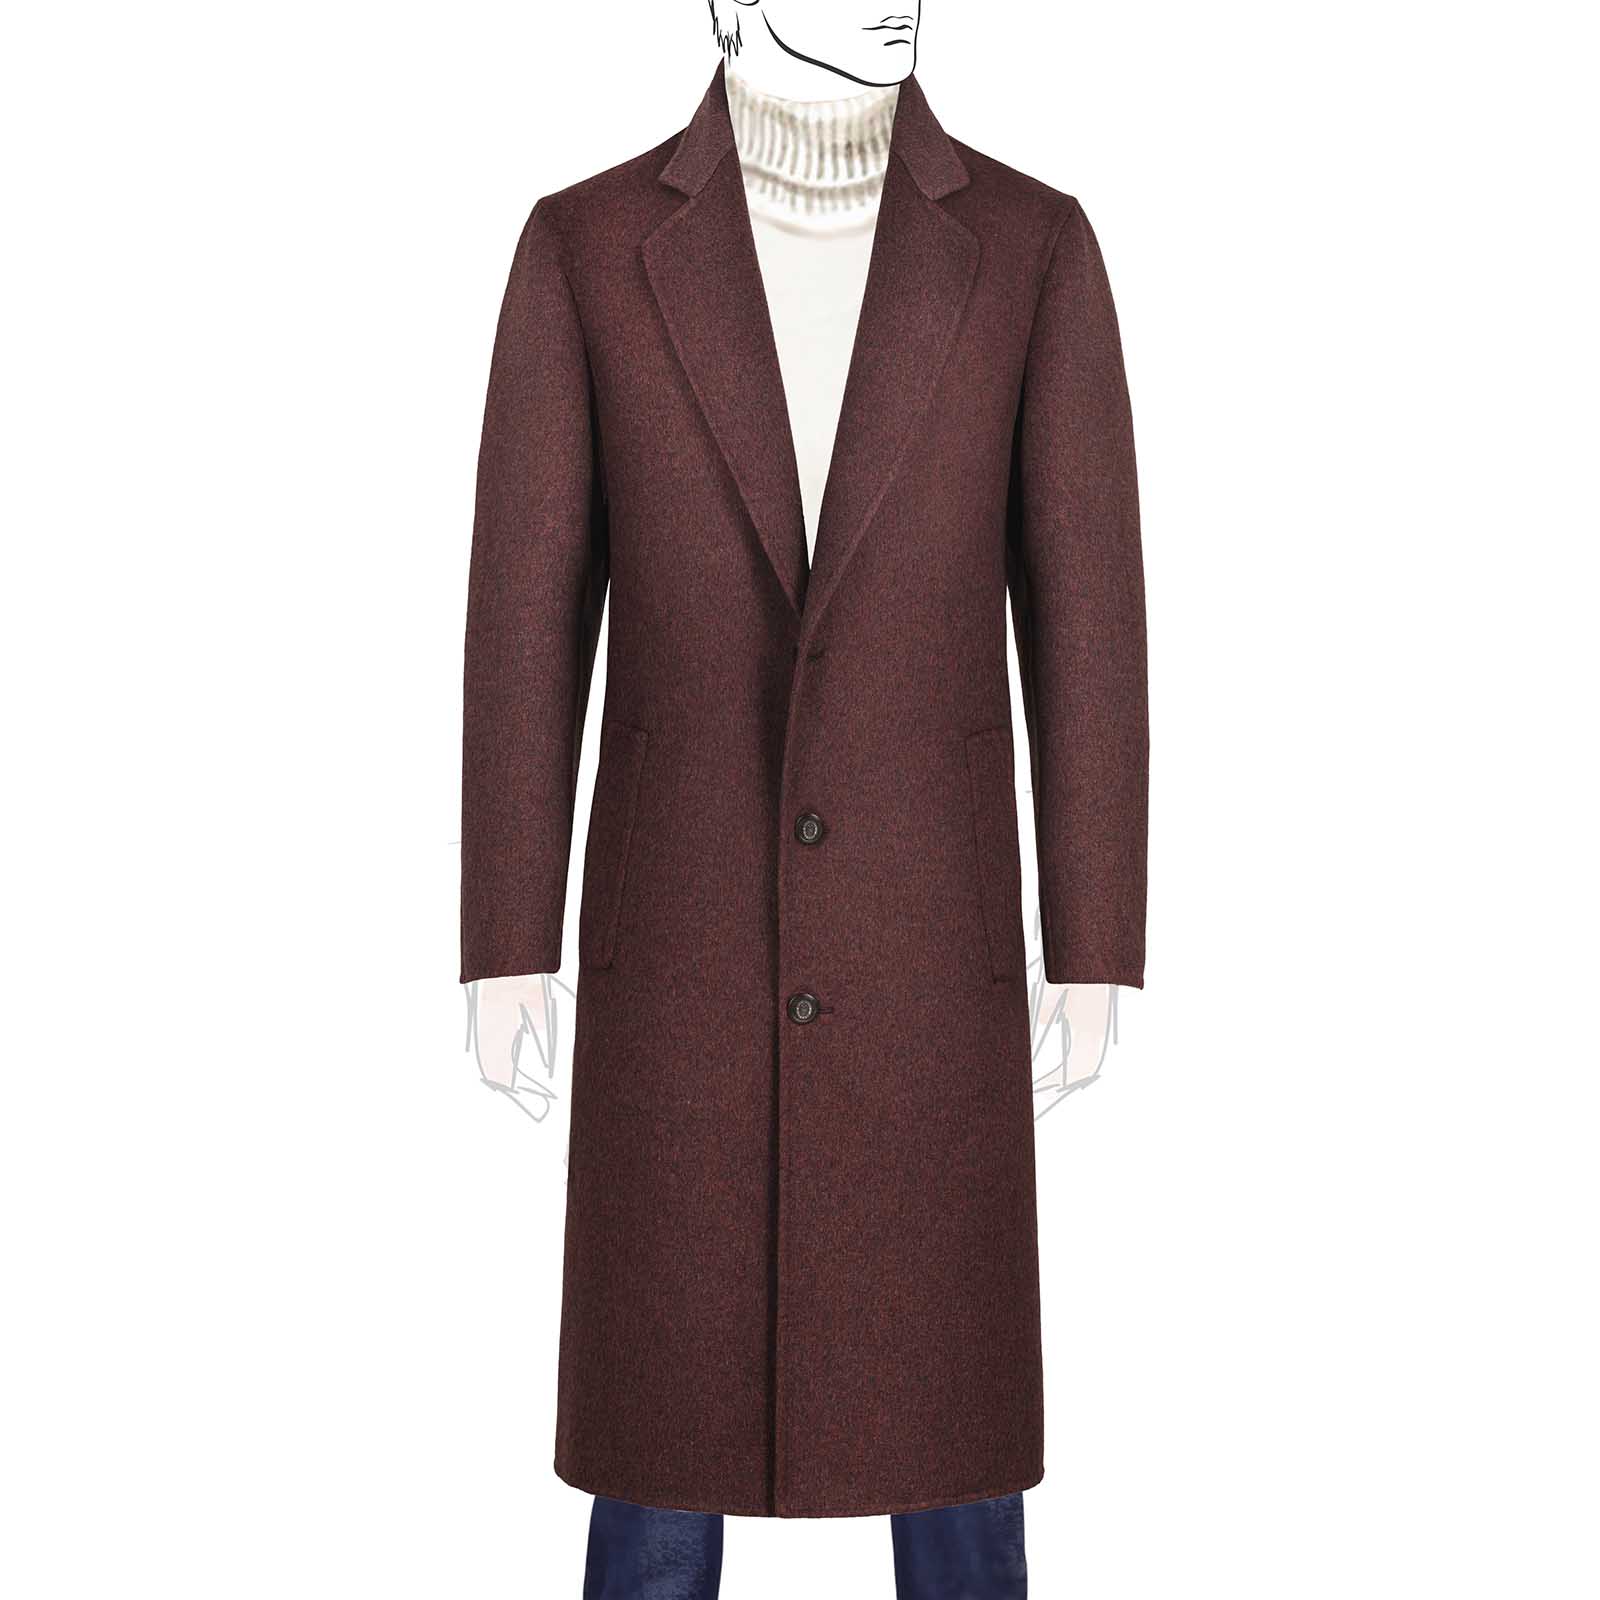 Mariano Rubinacci - Burgundy cashmere coat Limited Edition